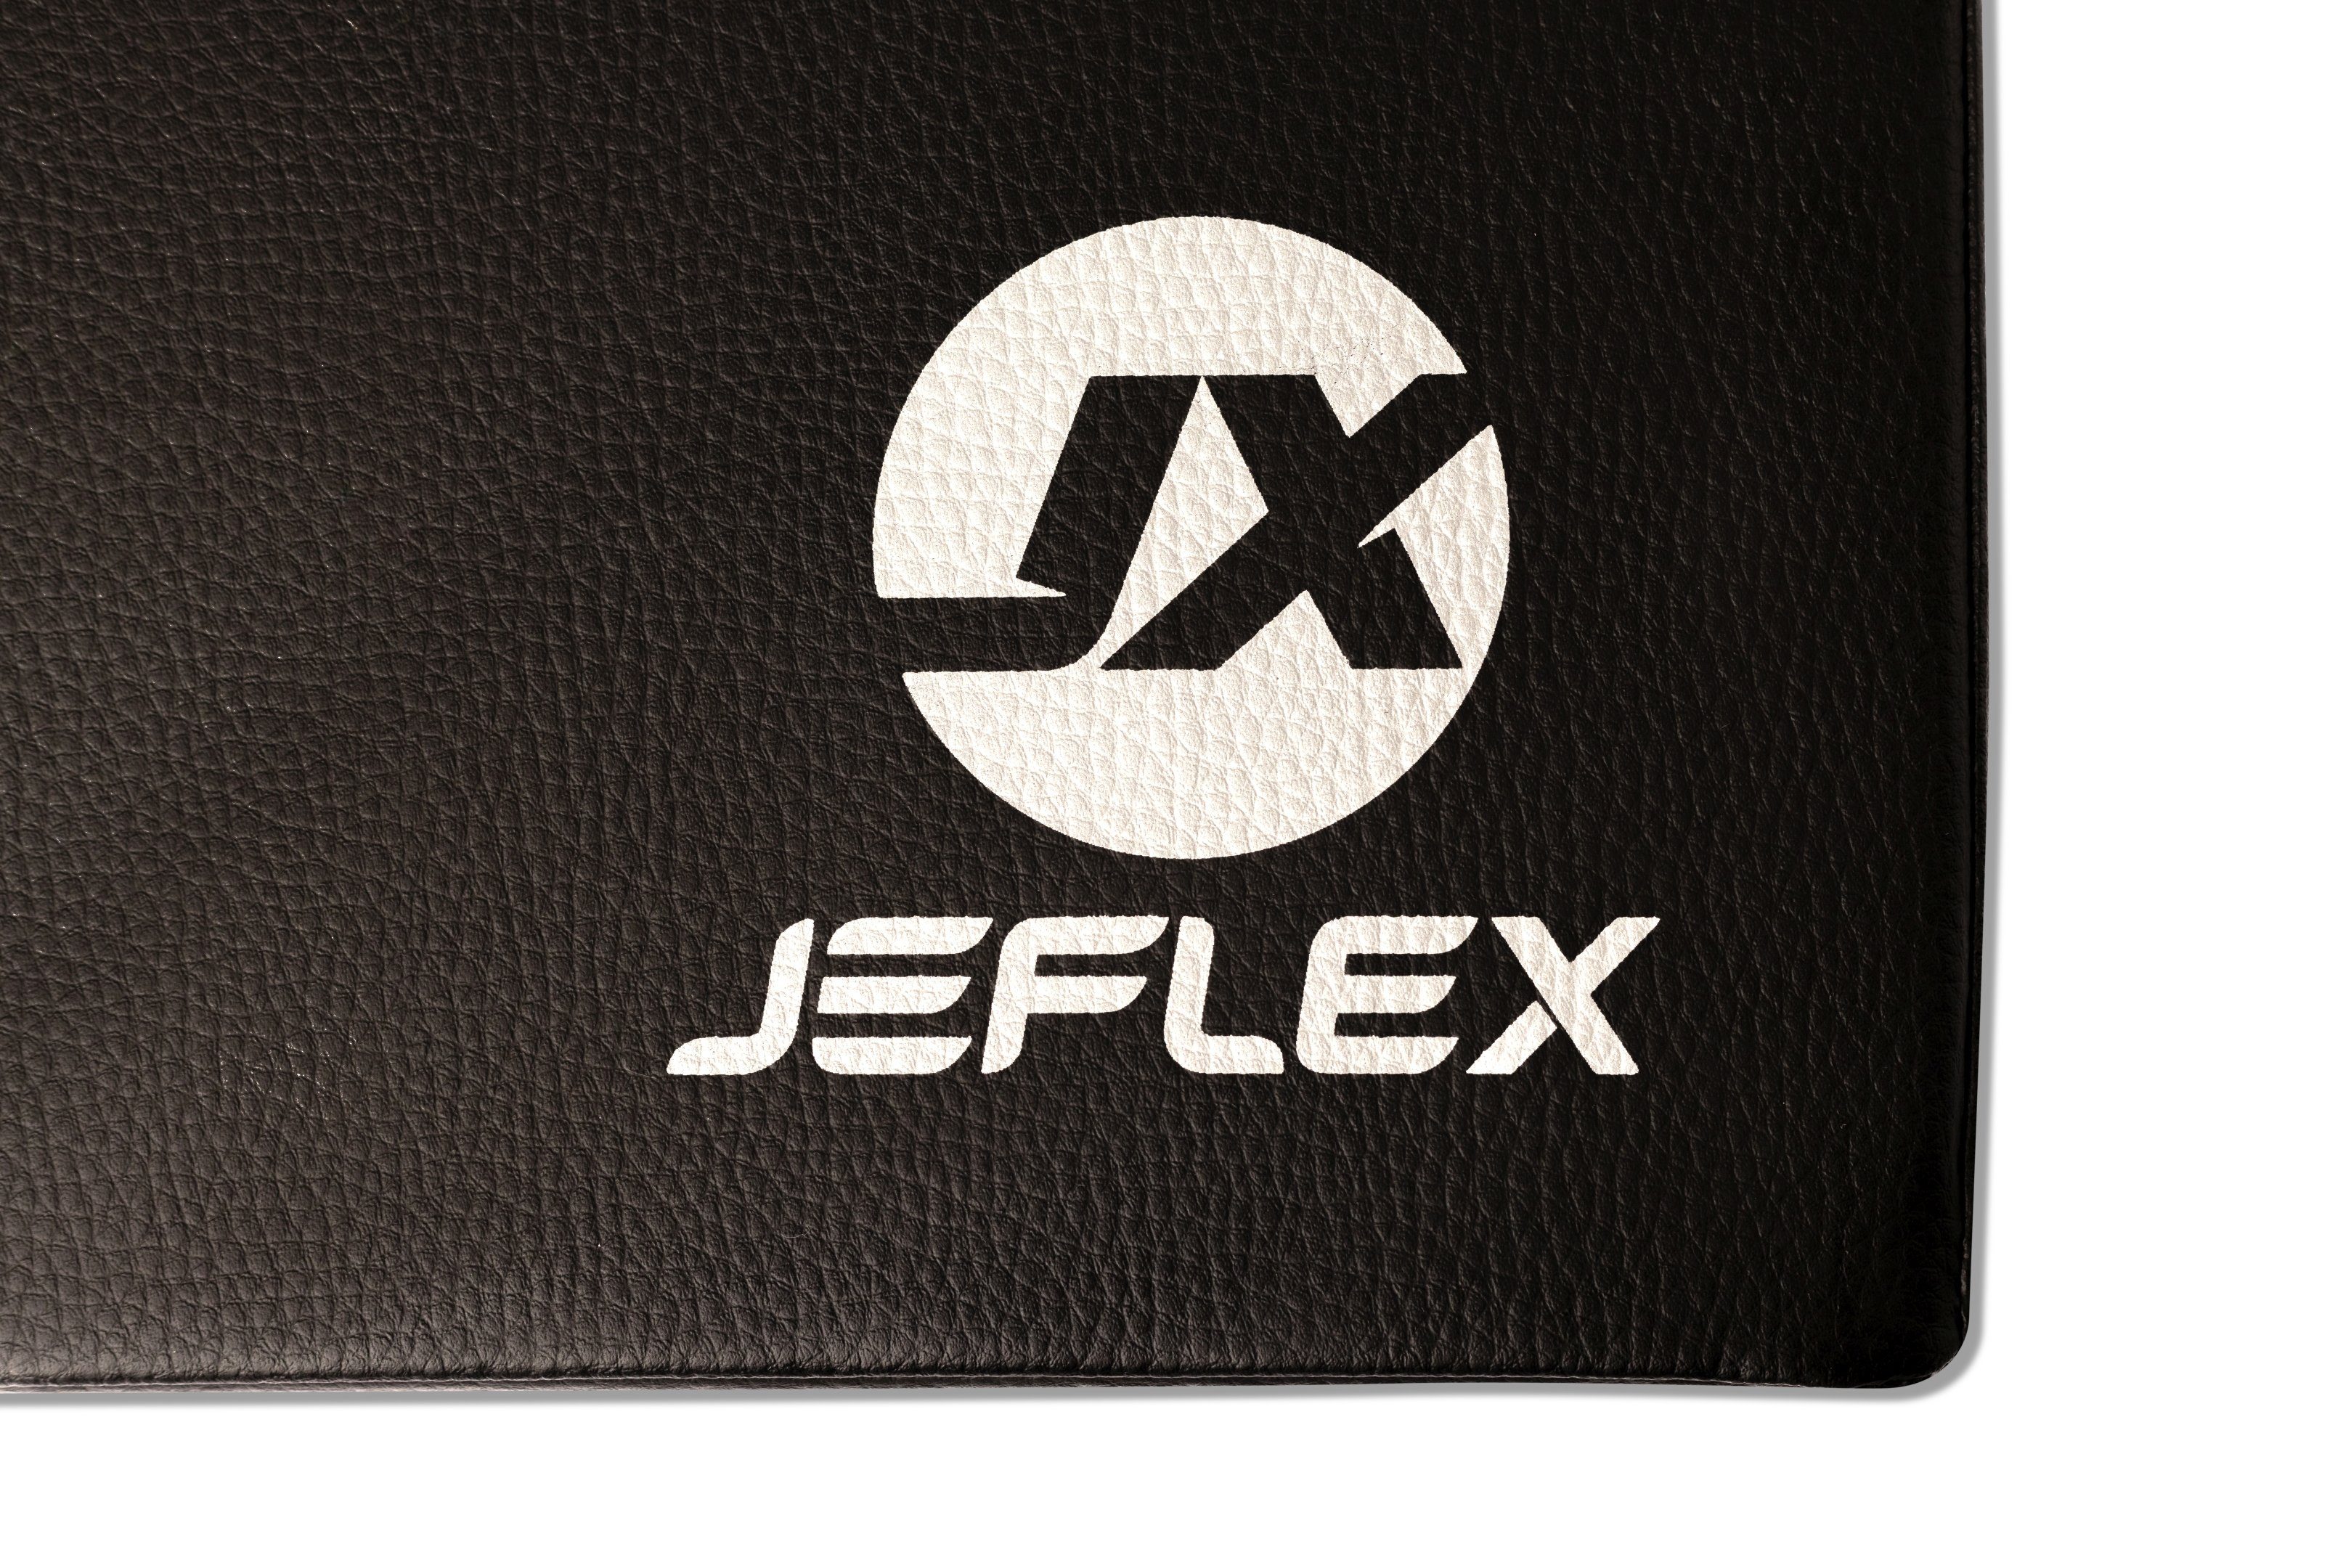 Weichbodenmatte Jeflex Made Made x 8cm, x in Schwarz x 100cm Jeflex Germany in x 8cm, 100cm 100cm klappbare, 100cm Weichbodenmatte Germany,